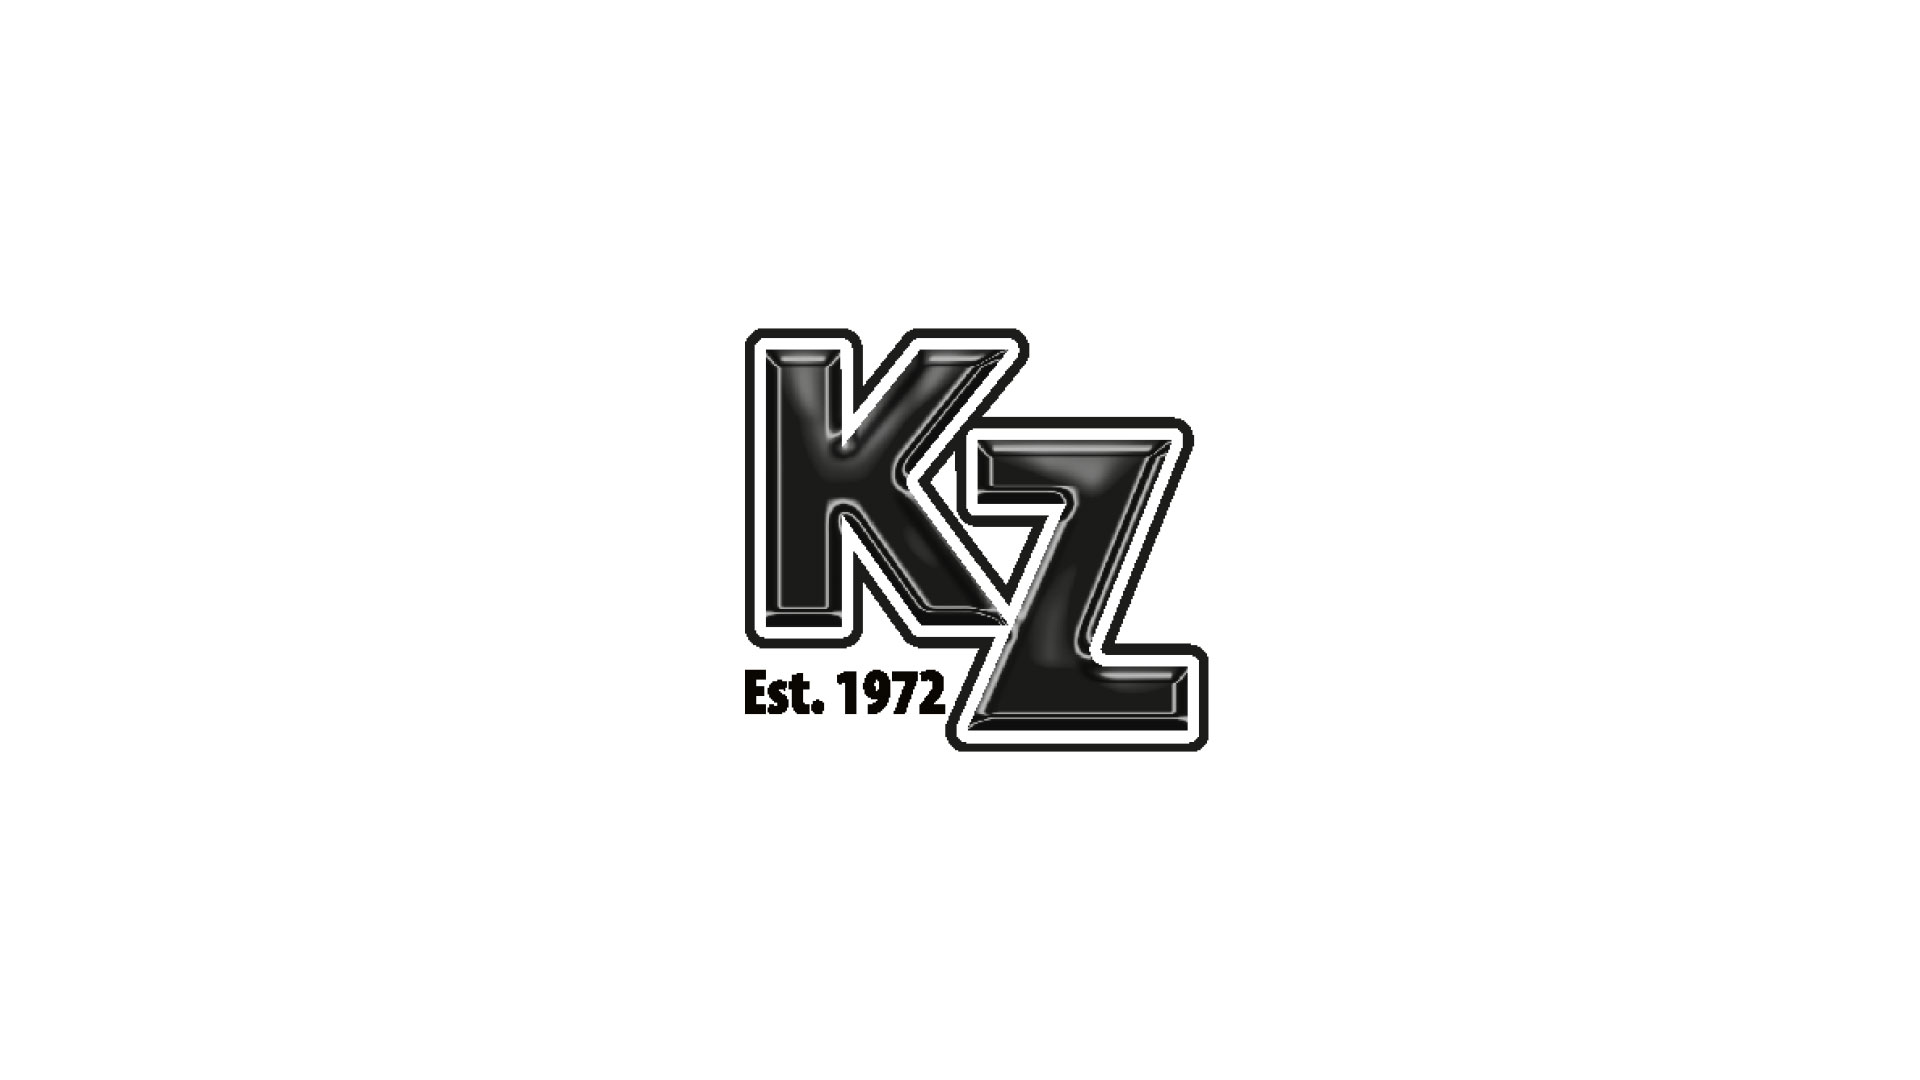 Kzsq kz. Логотип kz. Наклейка кз логотип. Zeek логотип. RV логотип на белом фоне.